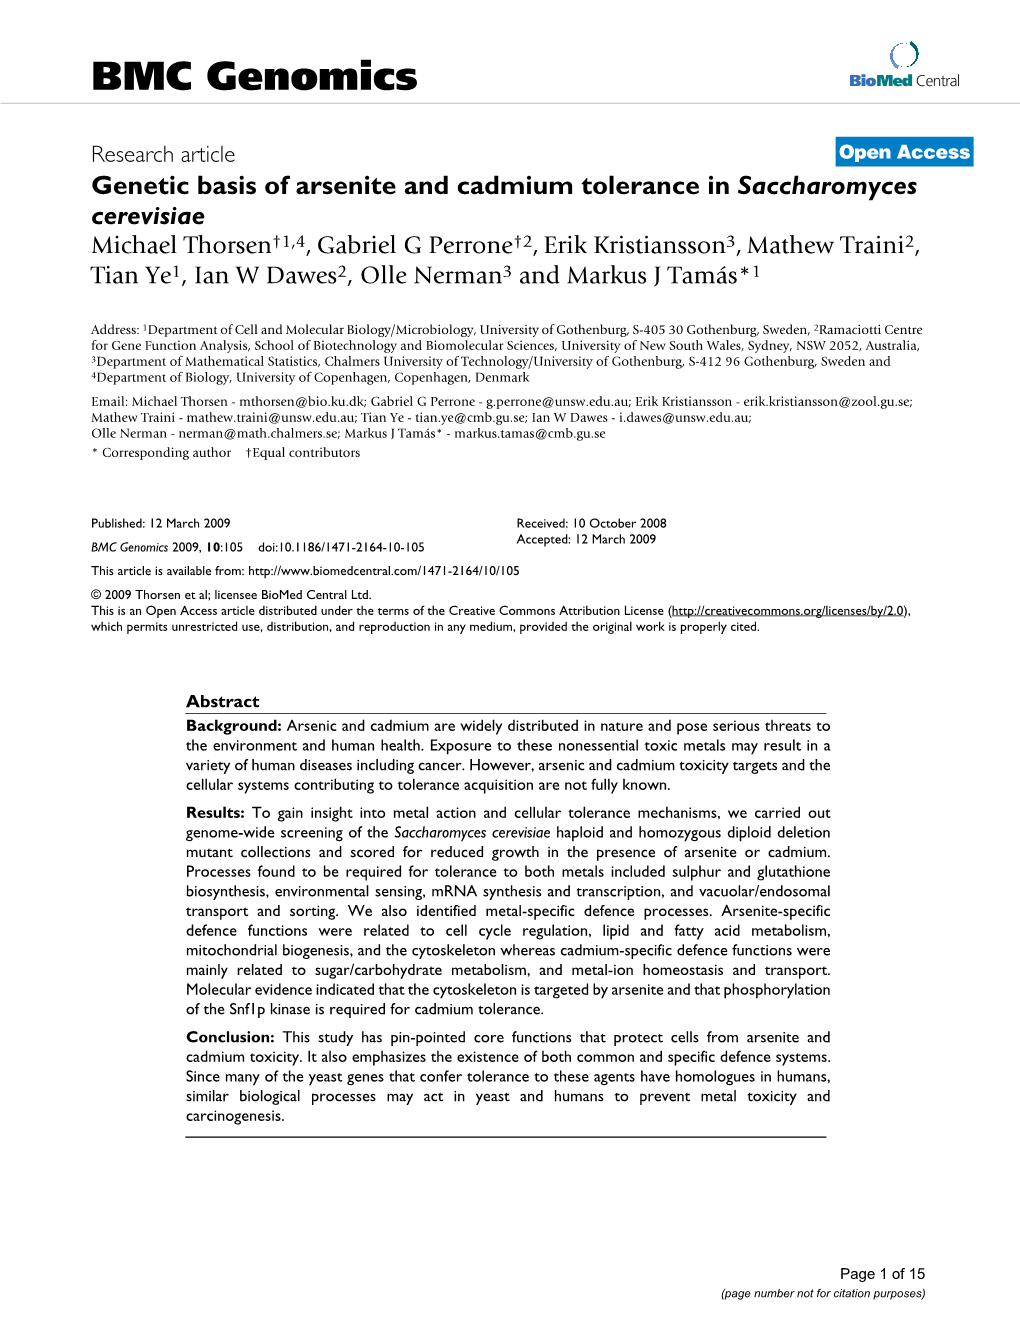 Genetic Basis of Arsenite and Cadmium Tolerance in Saccharomyces Cerevisiae